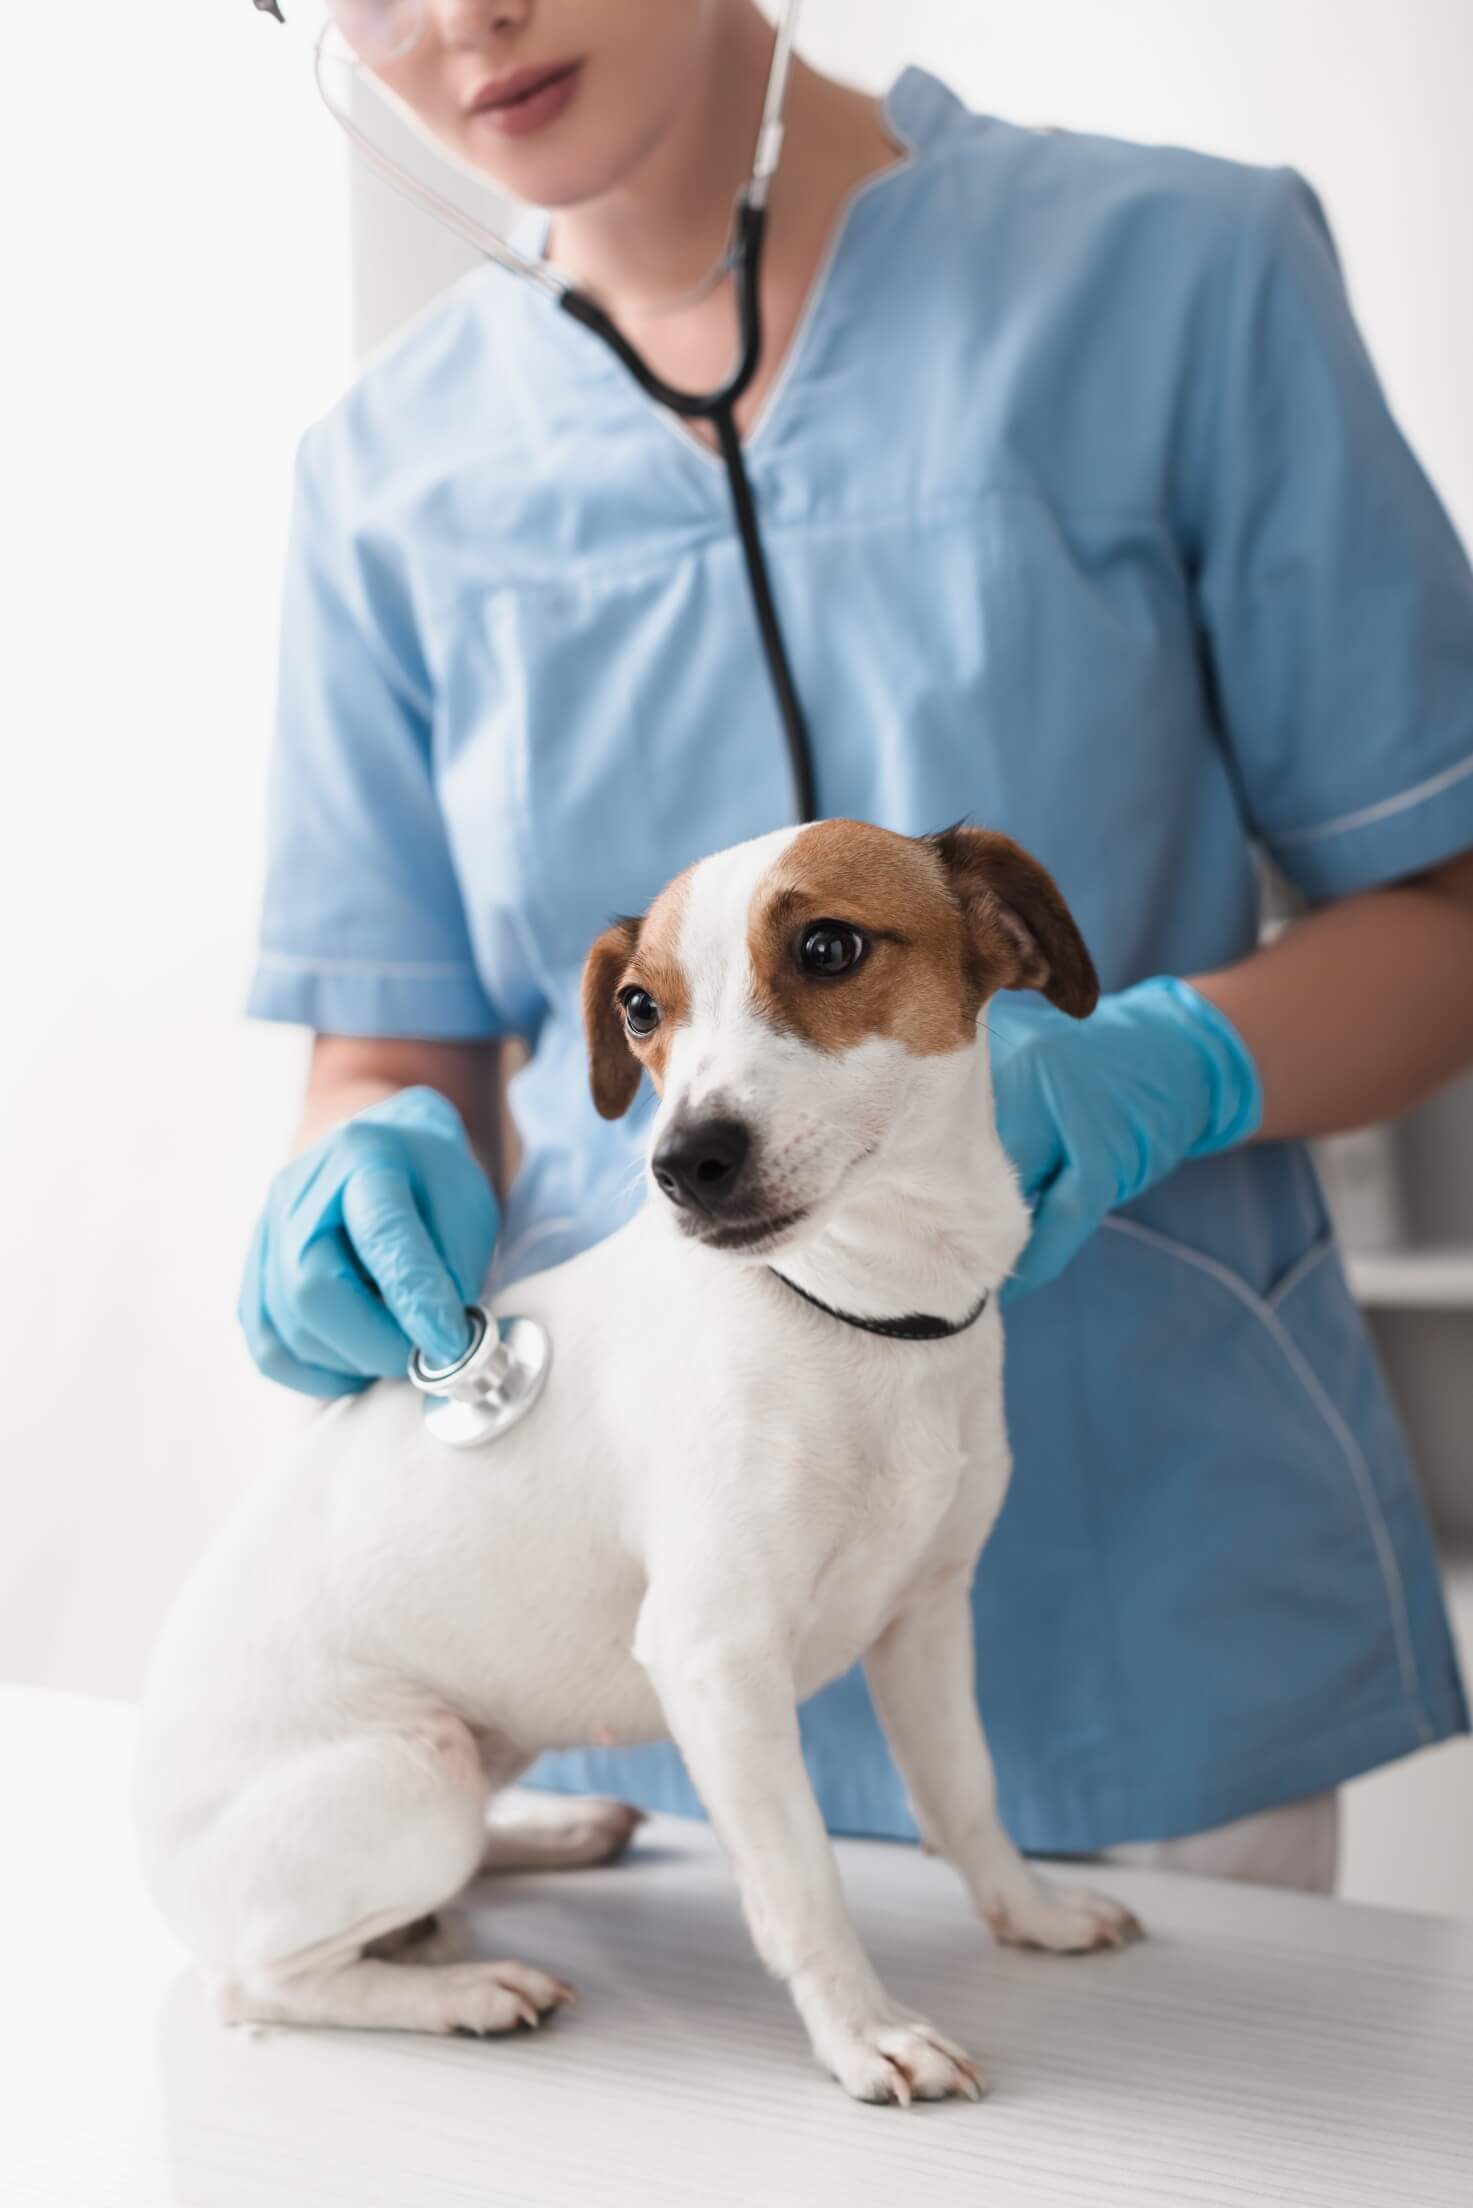 vet examining jack russel terrier